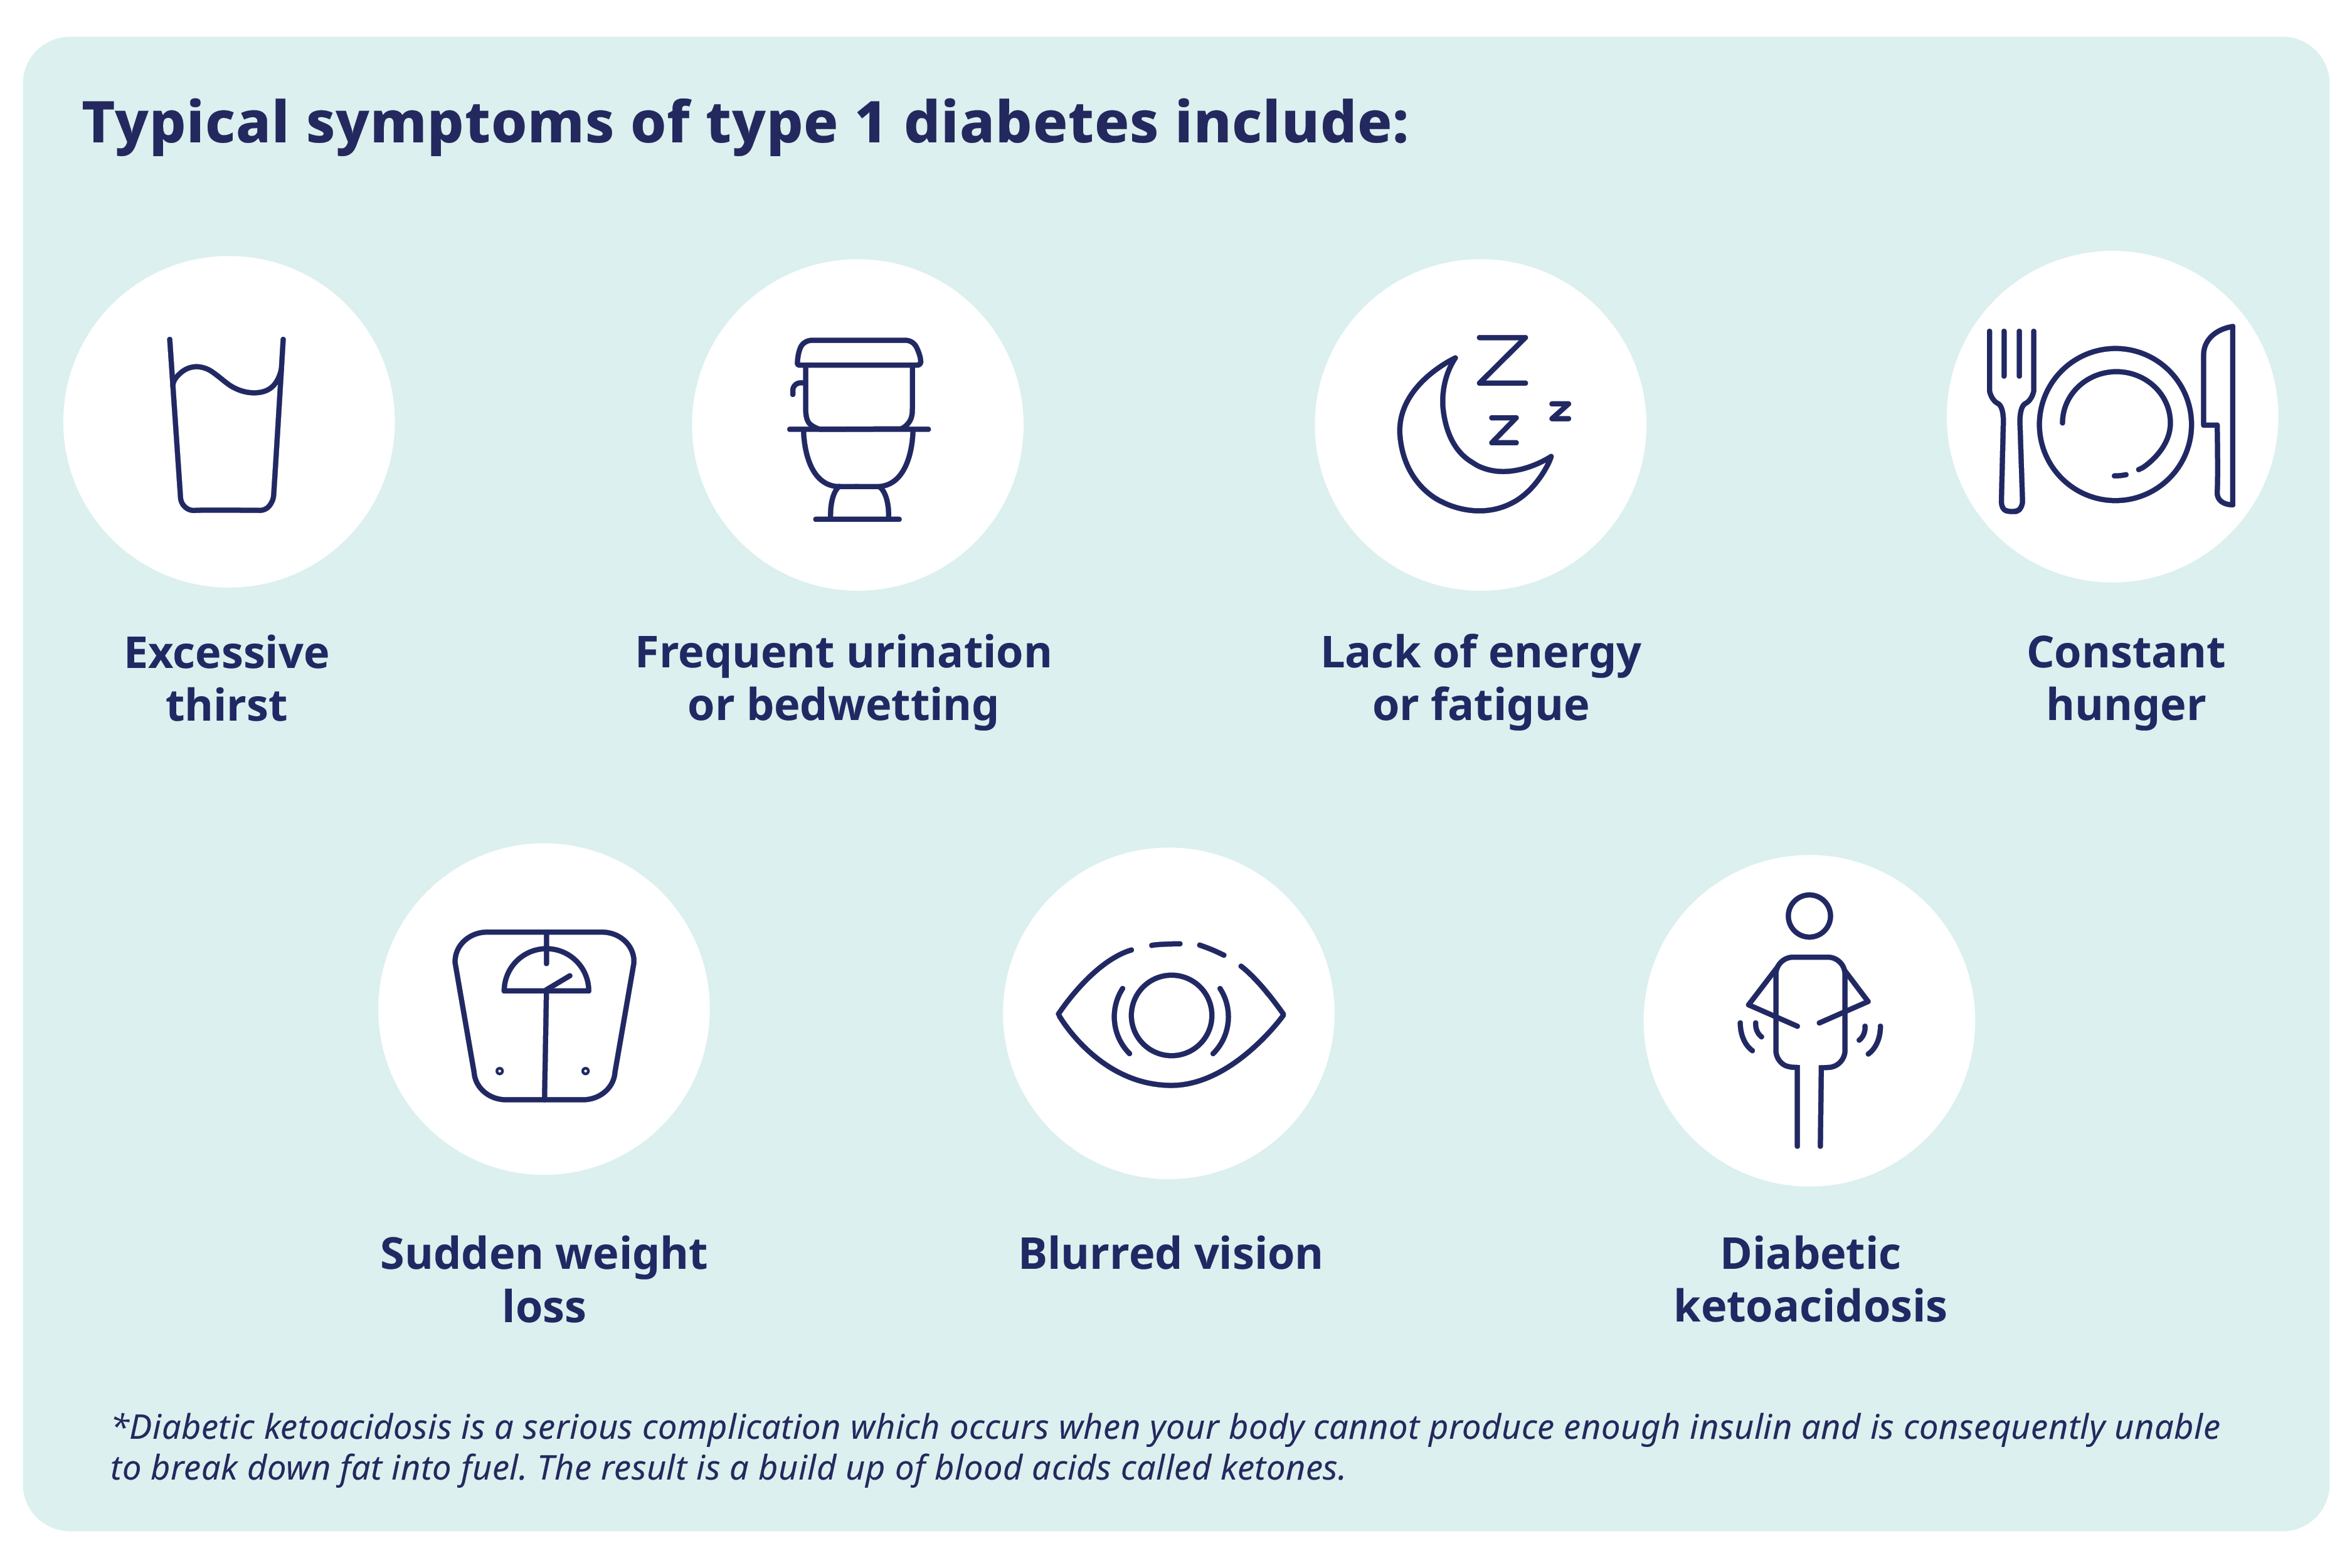 Symptoms of type 1 diabetes